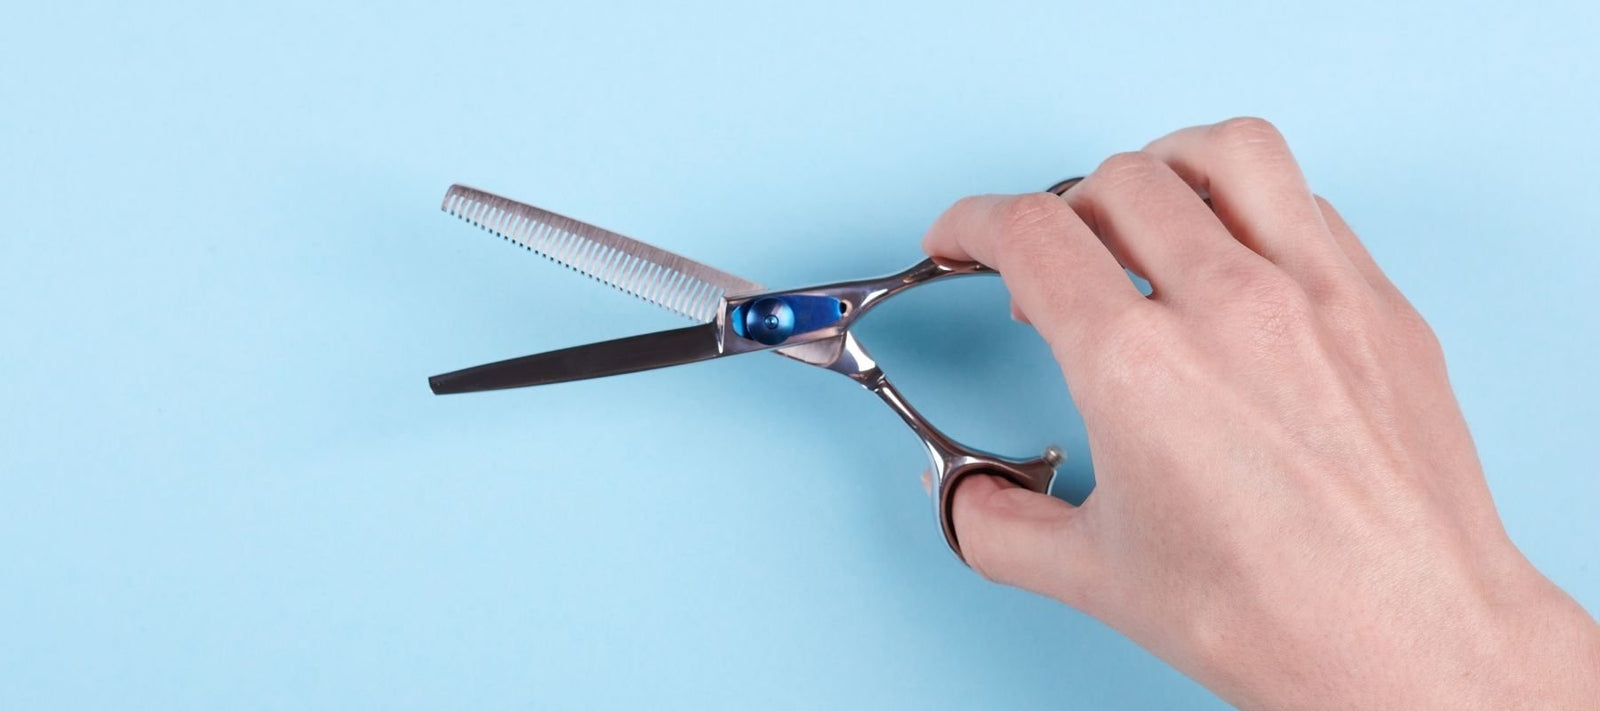 Hair Scissors Hair Cutting Scissors Stainless Steel Razor Hair Trimming  Scissors 6.5 Long Blue